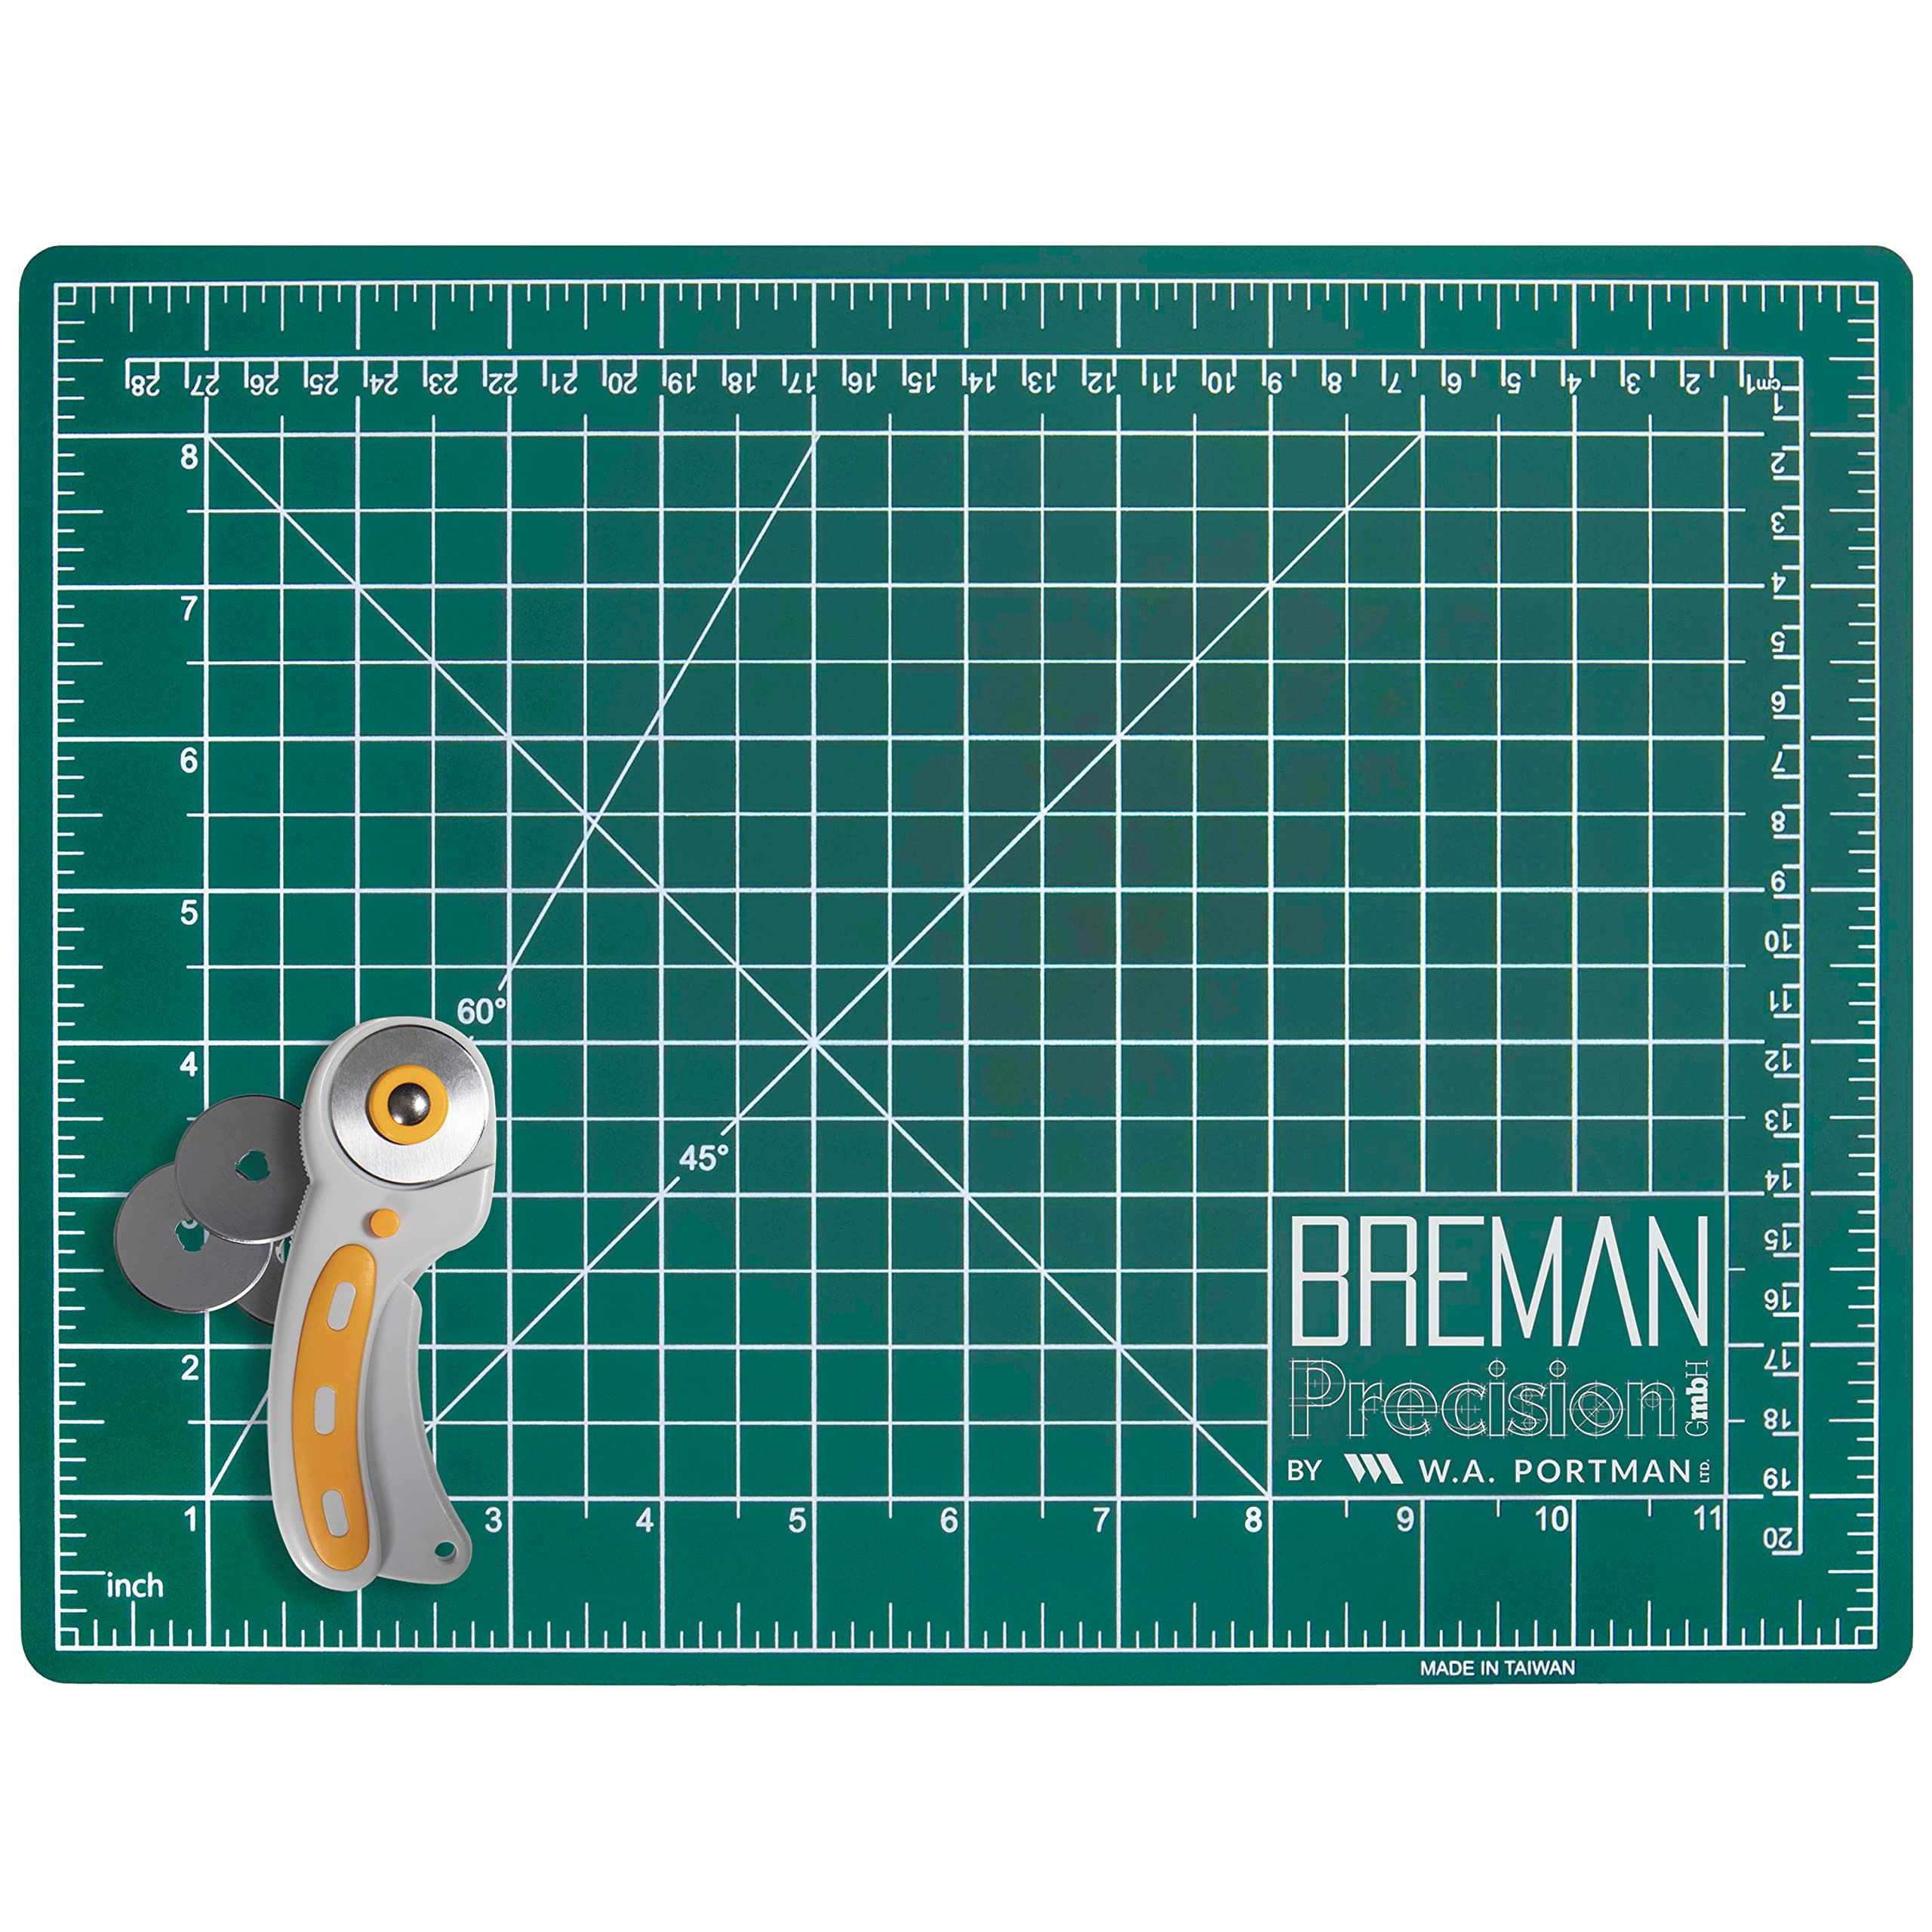 Breman Precision Stainless Steel Ruler, 18-inch Cork Back Ruler 10-Pack